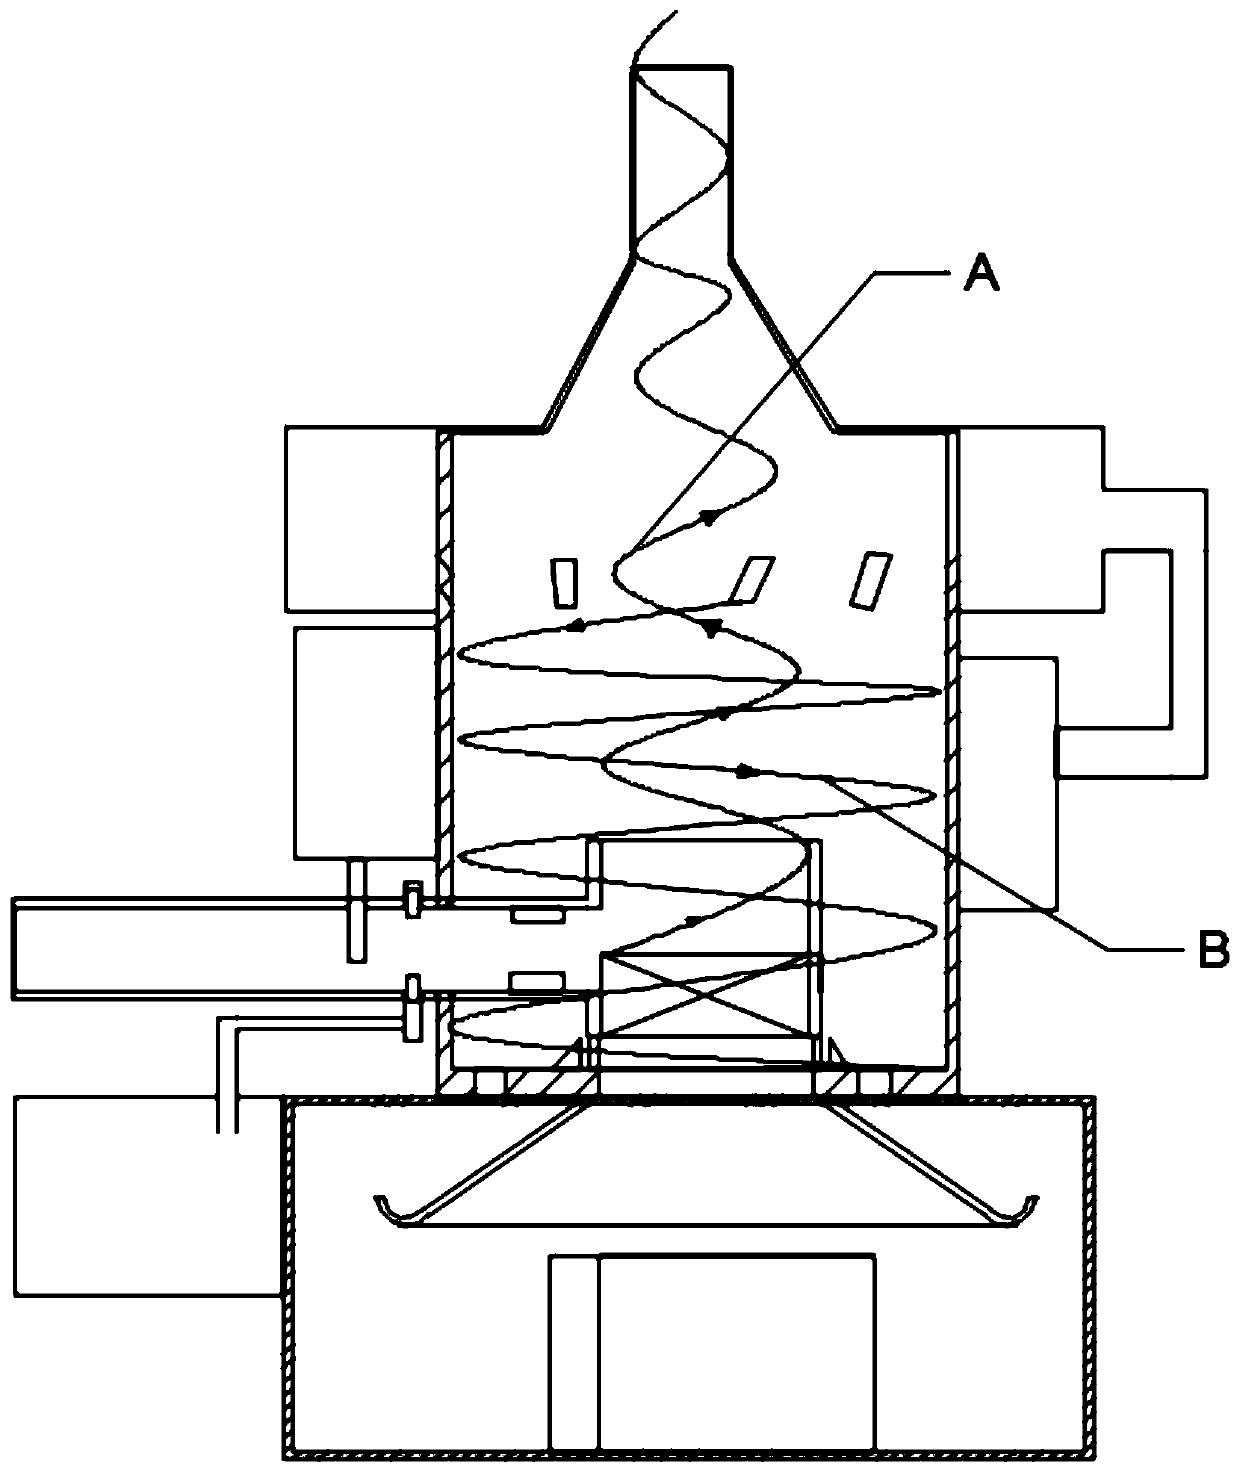 Flue gas semi-dry desulfurization device and method